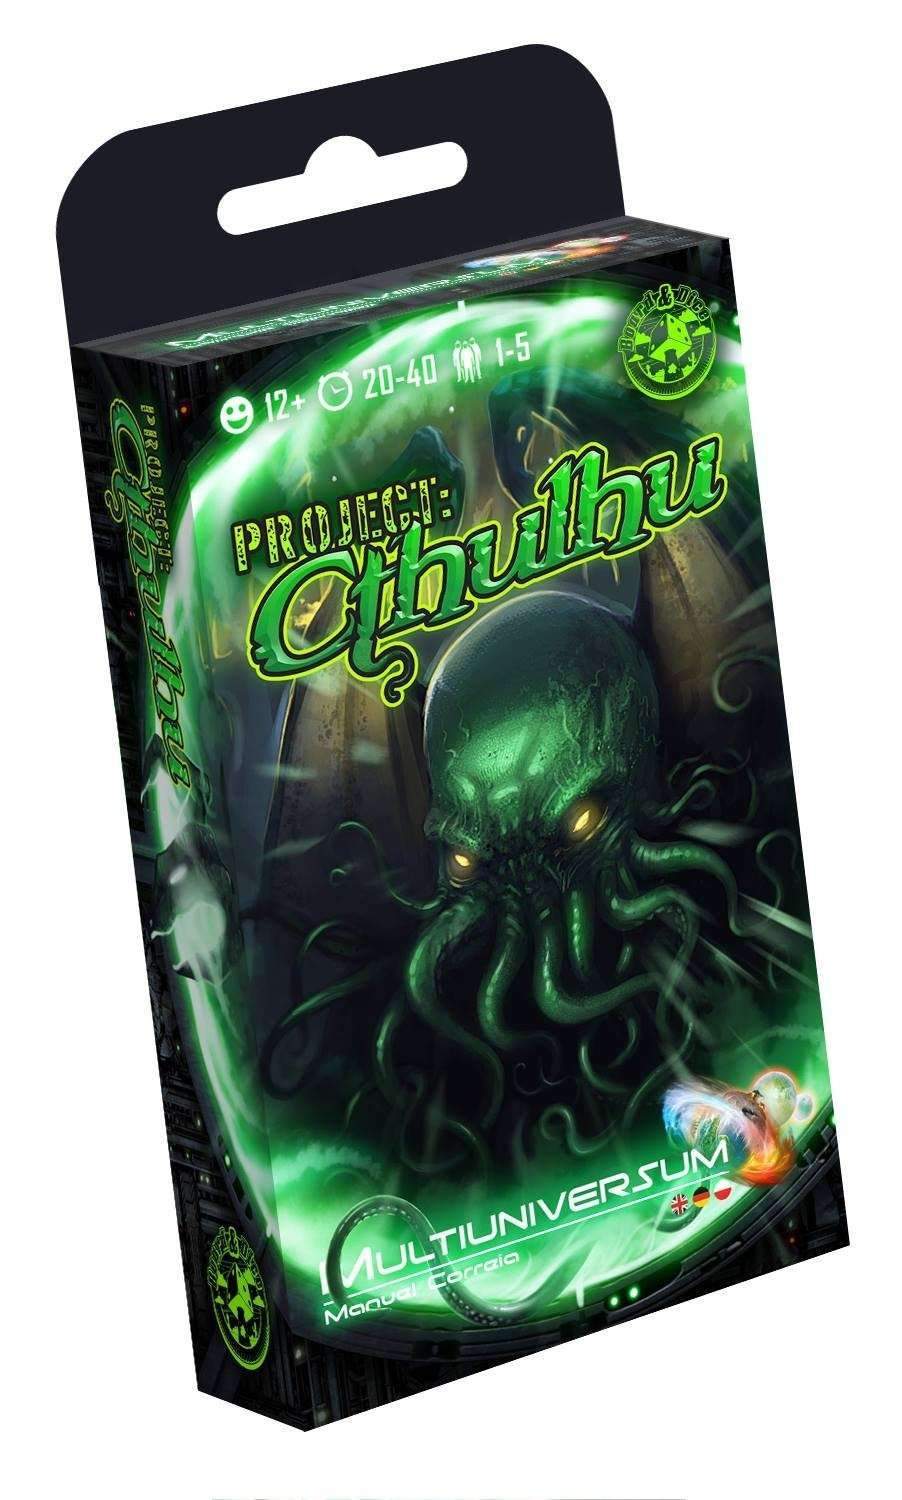 Multiuniversum - Project: Cthulhu (Kickstarter Special) Kickstarter Board Game Board&Dice